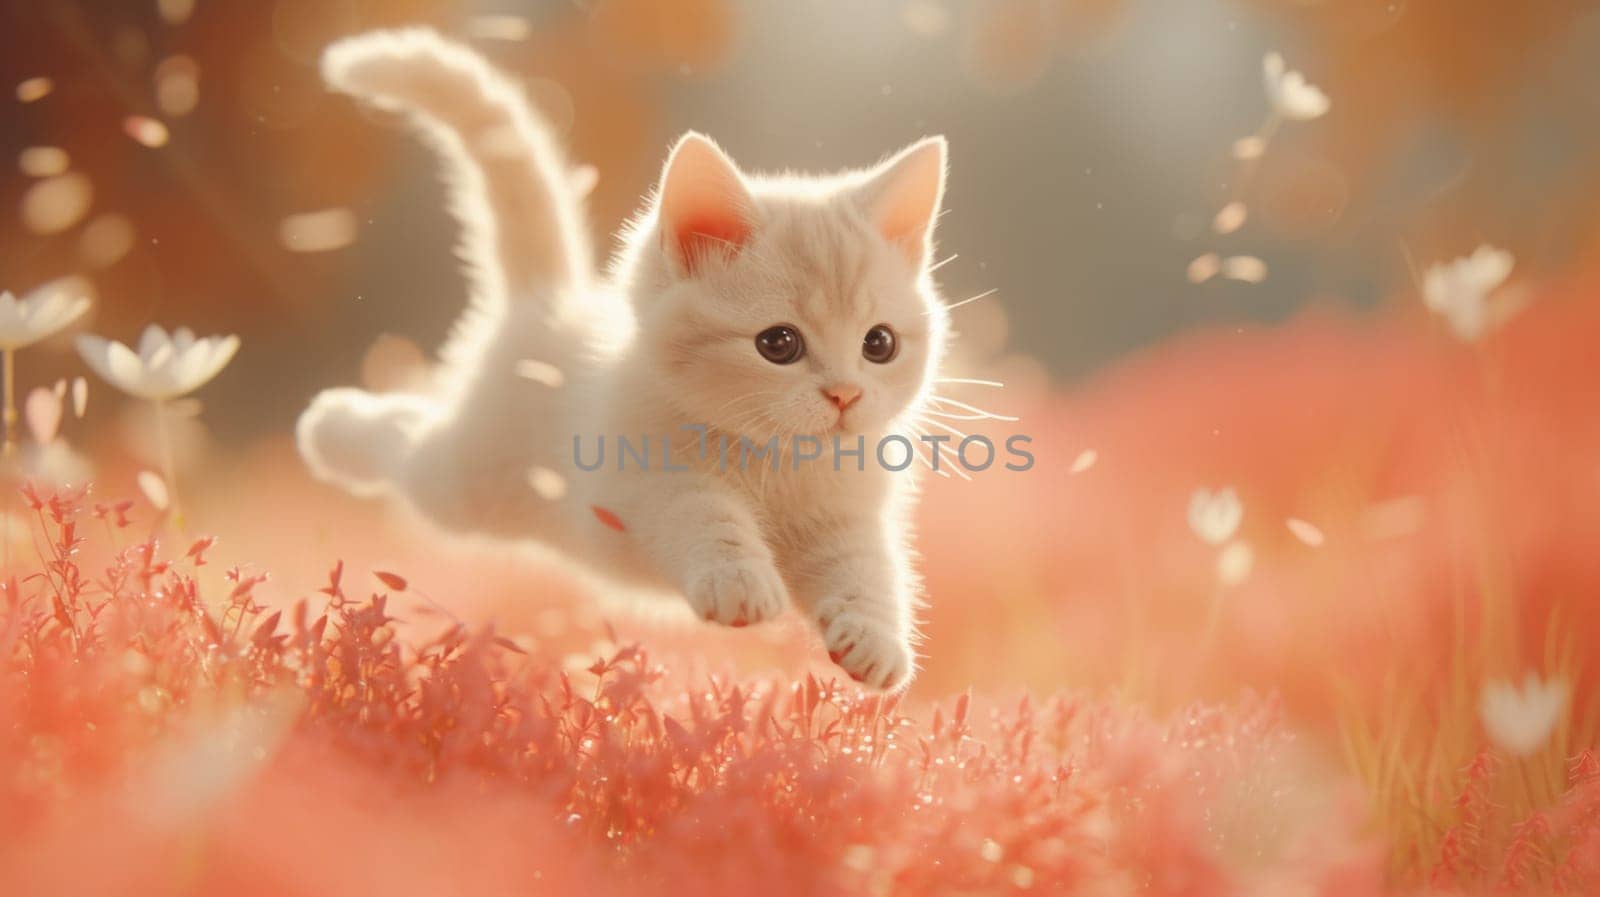 A white kitten running through a field of flowers and grass